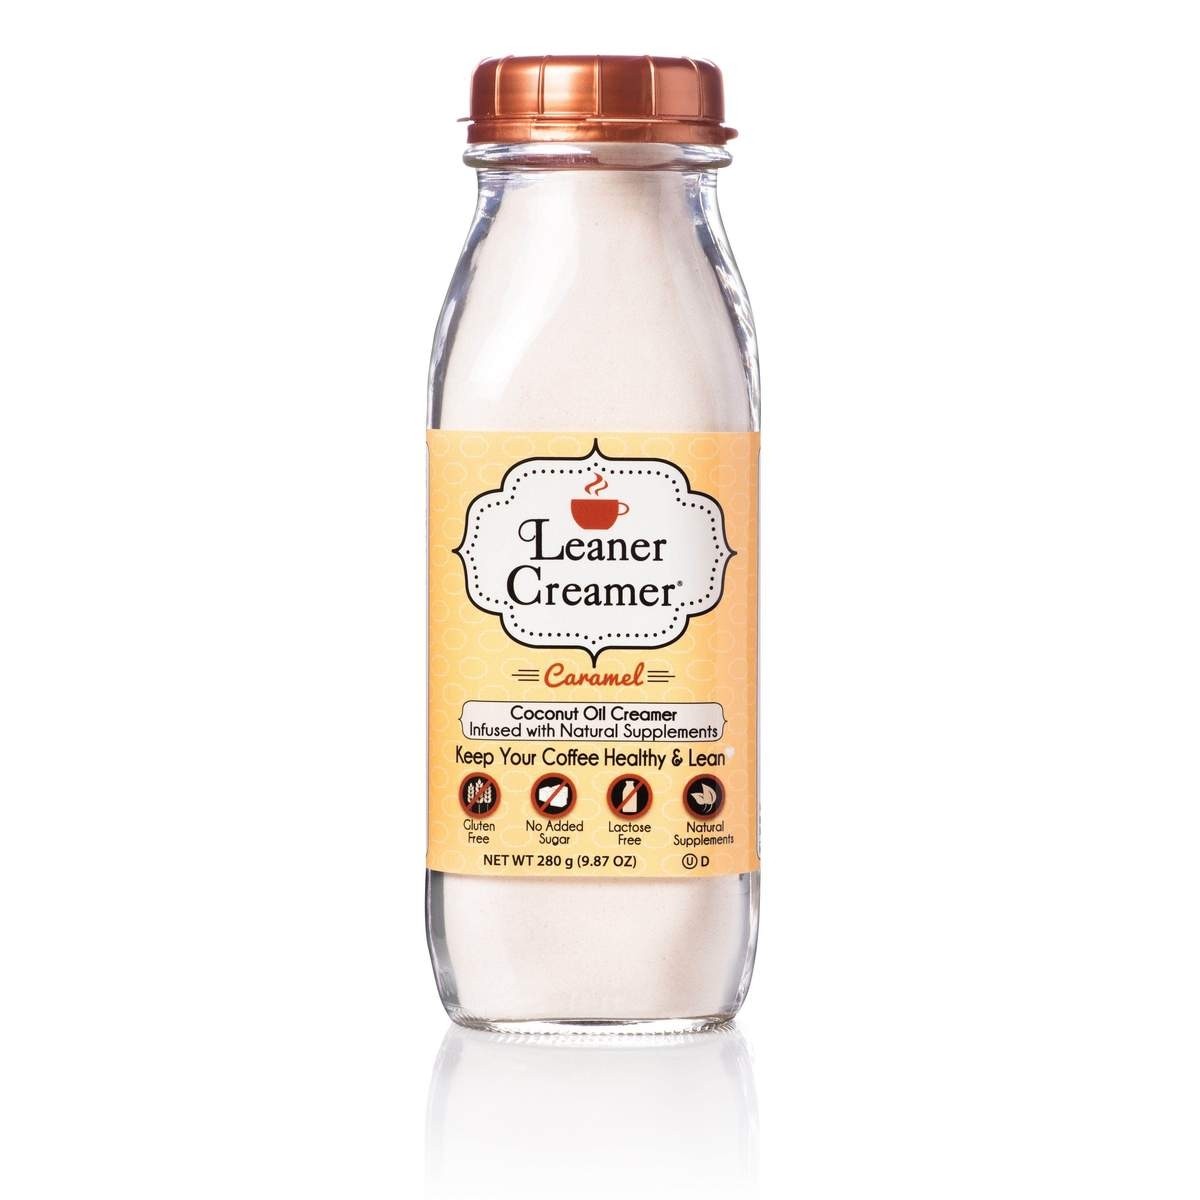 美國椰子油焦糖非乳咖啡素奶粉" Leaner Creamer" ORIGINAL CARAMEL COCONUT OIL CREAMER